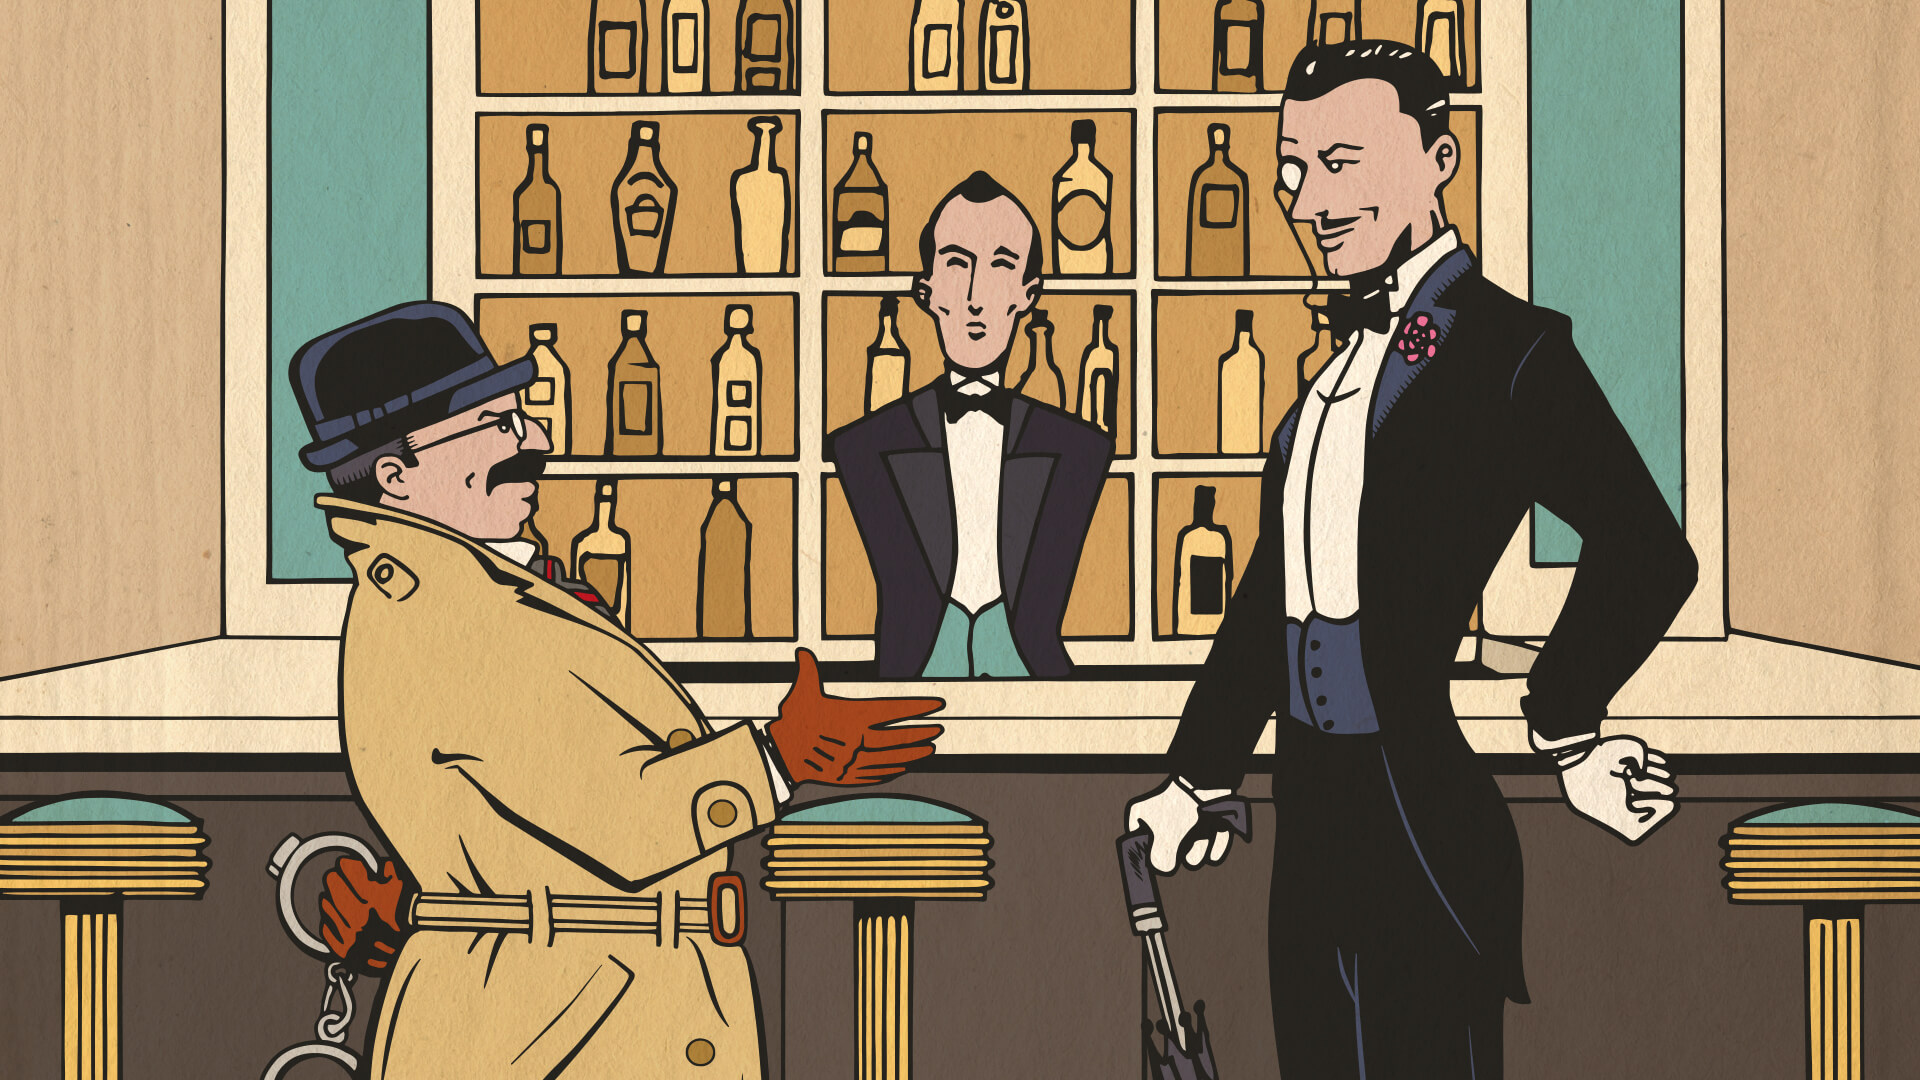 Smith & Whistle illustration at bar